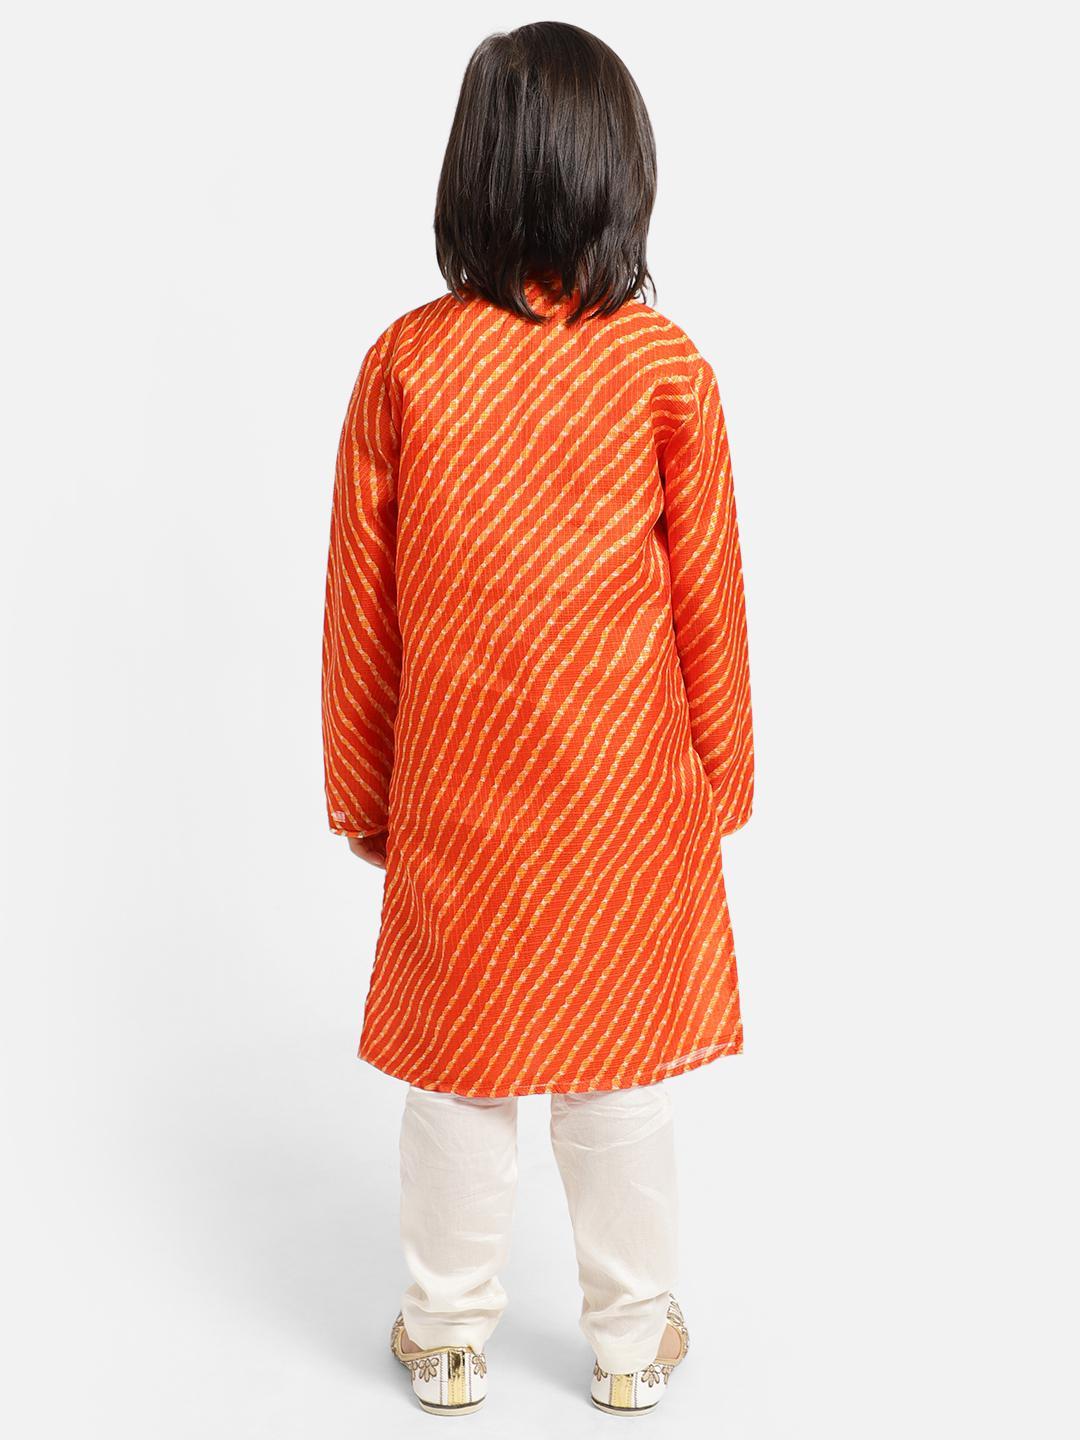 orange-printed-kurta-with-white-pajama-set-10520078OR, Indian Kids Clothing, Satin Boy Kurta Pajama Set